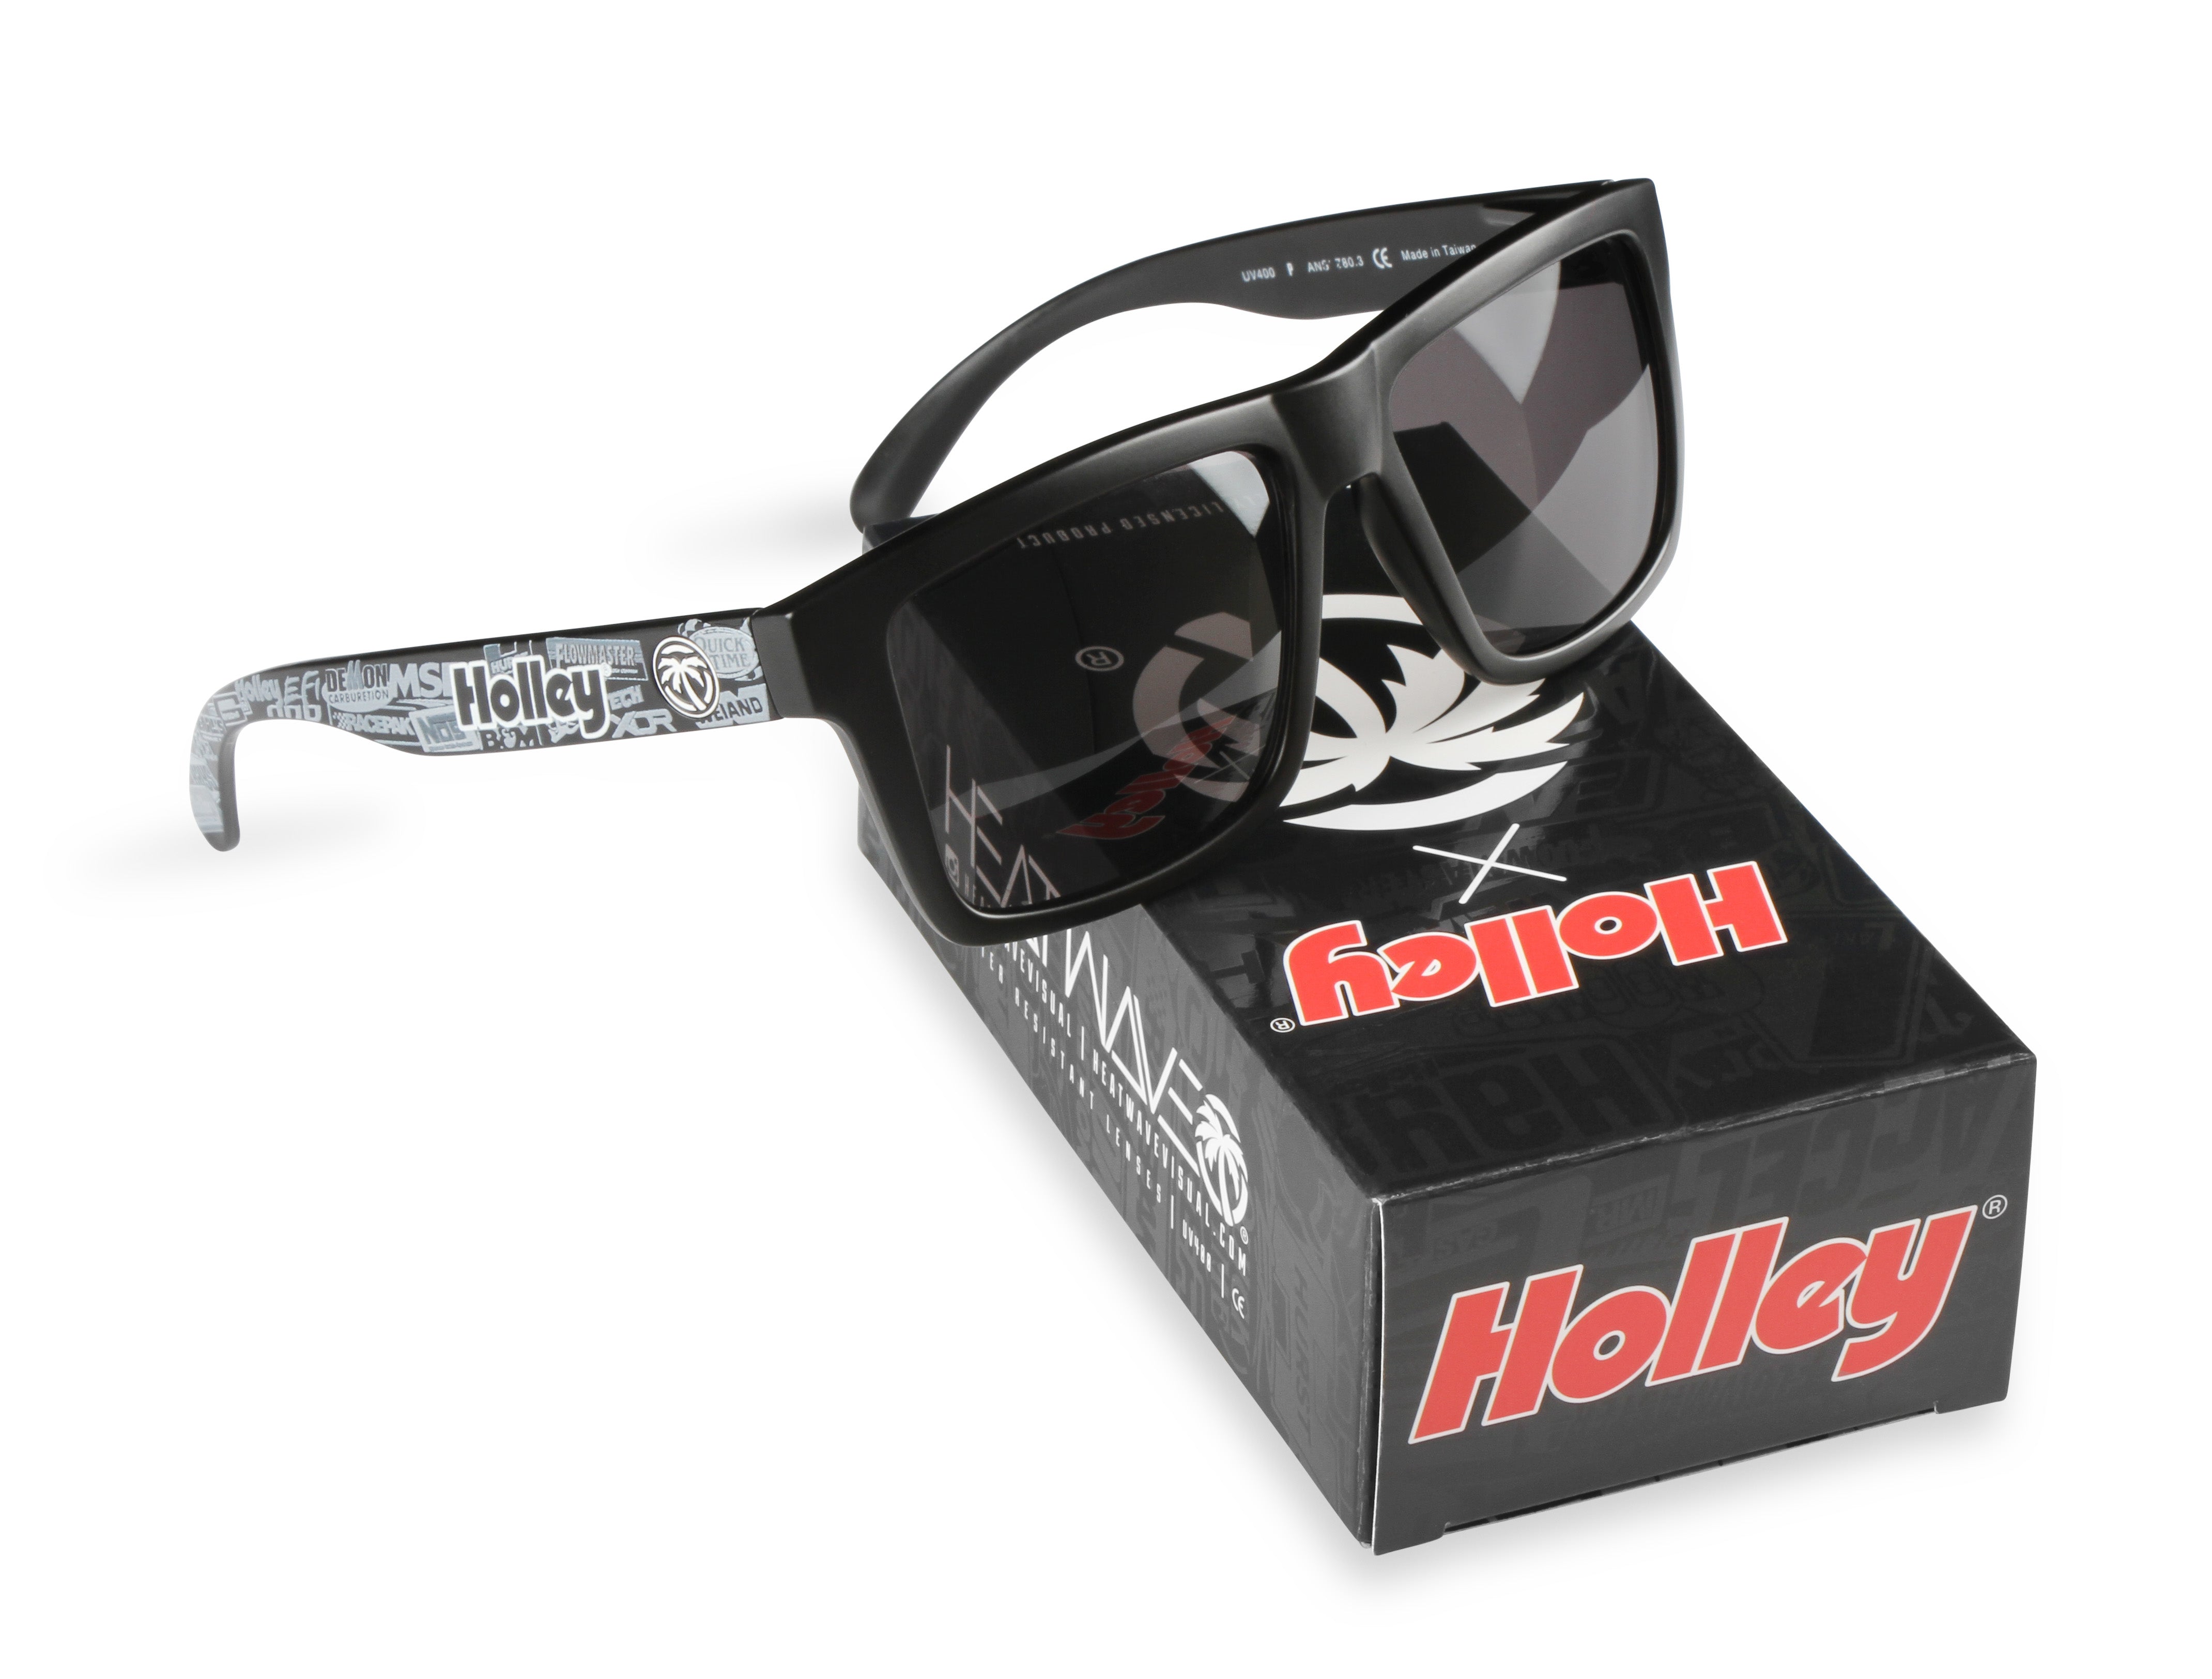 Holley Sunglasses 36-498